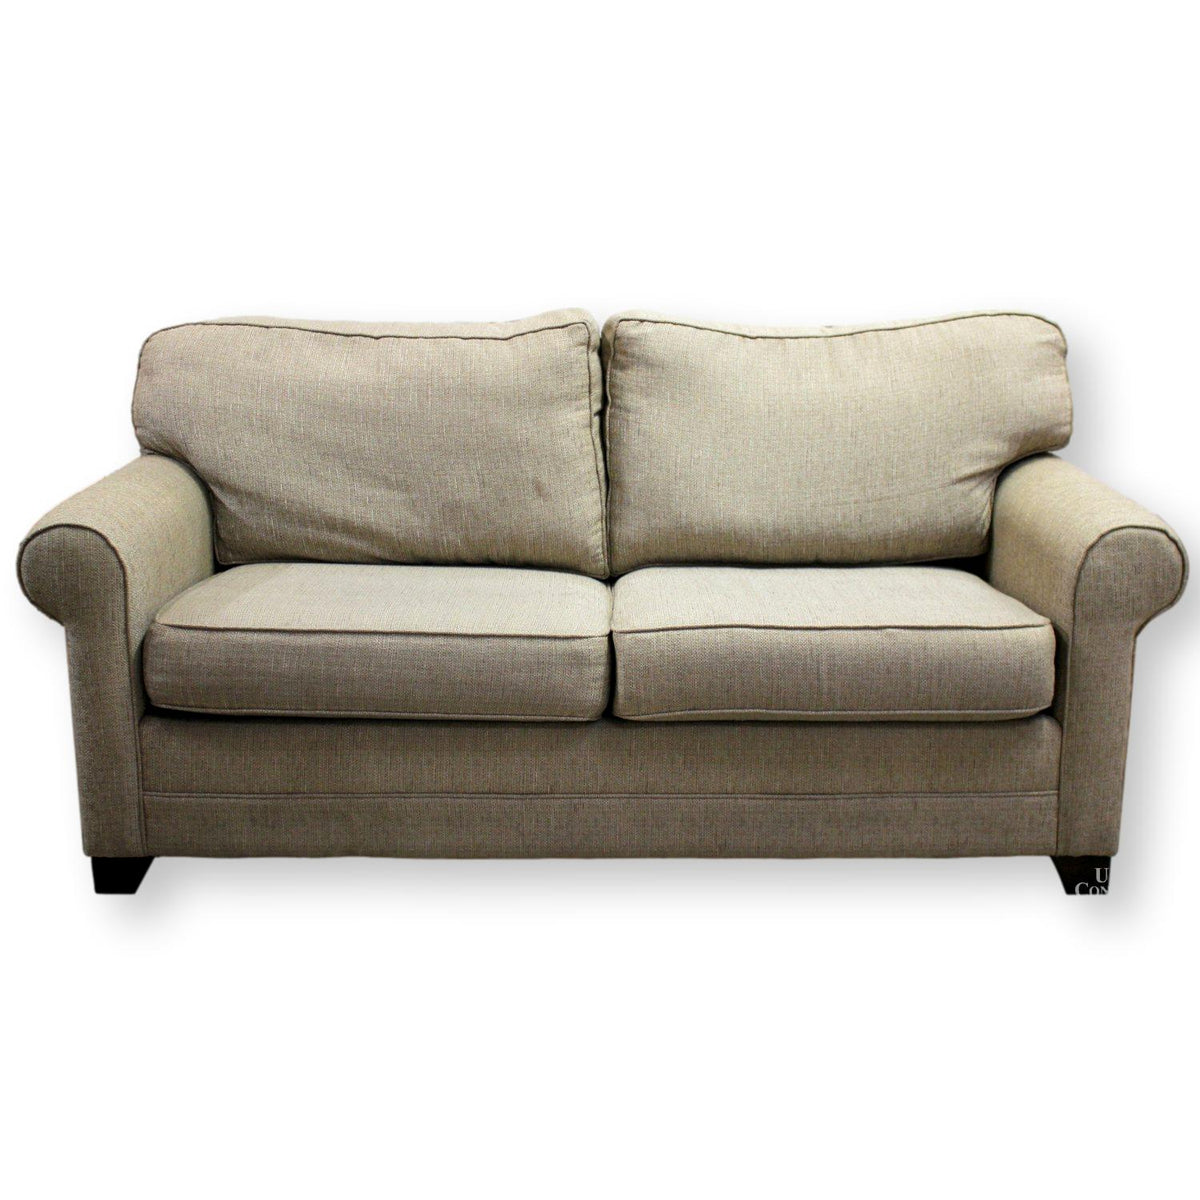 Linen Color Queen Size Sleeper Sofa